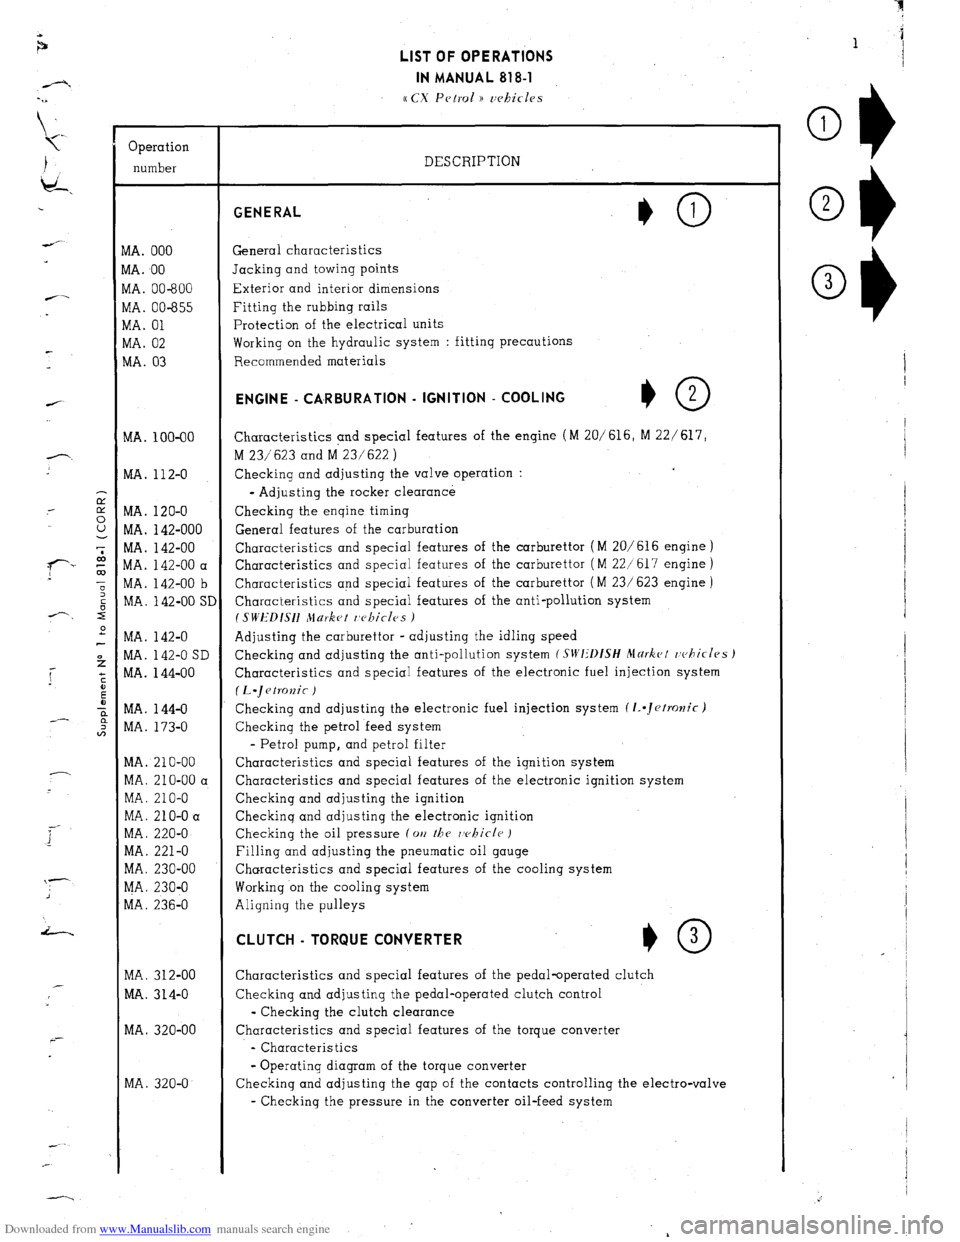 Citroen CX 1984 1.G Workshop Manual Downloaded from www.Manualslib.com manuals search engine Operation 
number 
VIA. 000 
VIA. 00 
VIA. 00-600 
vlA. 00-655 
VIA. 01 
WA. 02 
MA. 03 
MA. 100-00 
MA. 112-O 
MA. 120-O 
MA. 142-000 
MA. 142